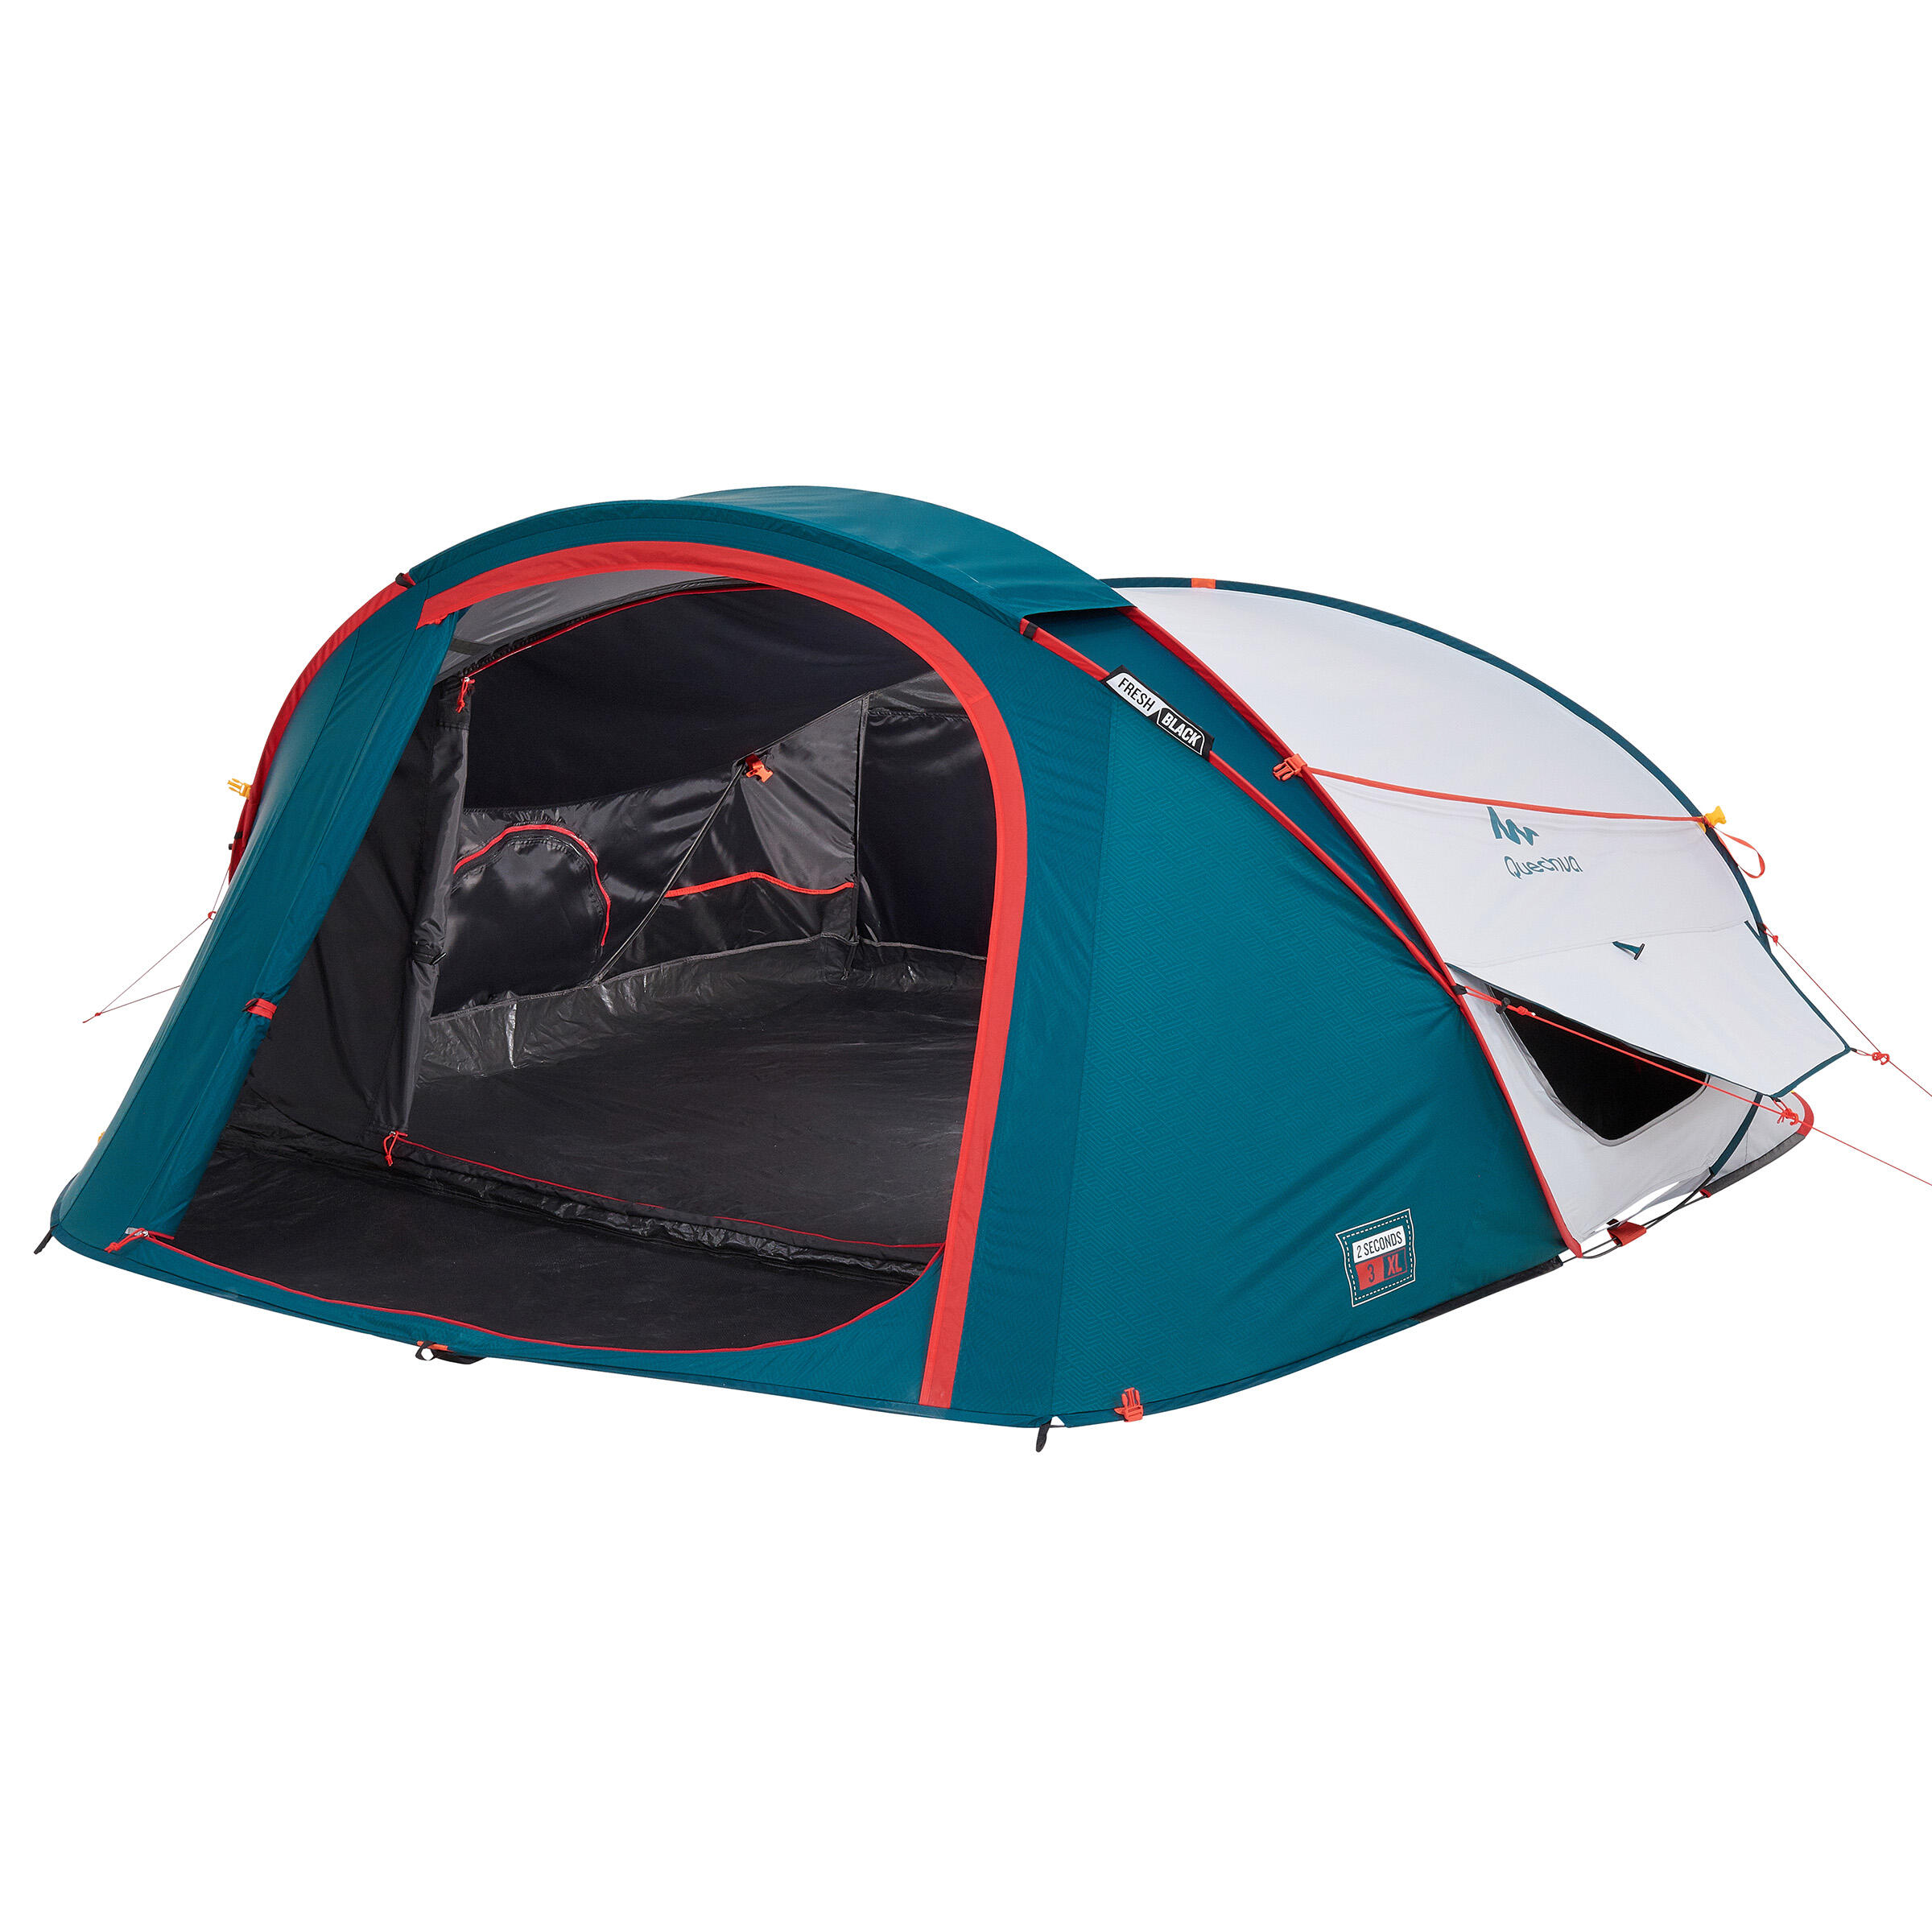 Cort camping 2 SECONDS FRESH&BLACK XL 3 persoane decathlon.ro  Corturi camping